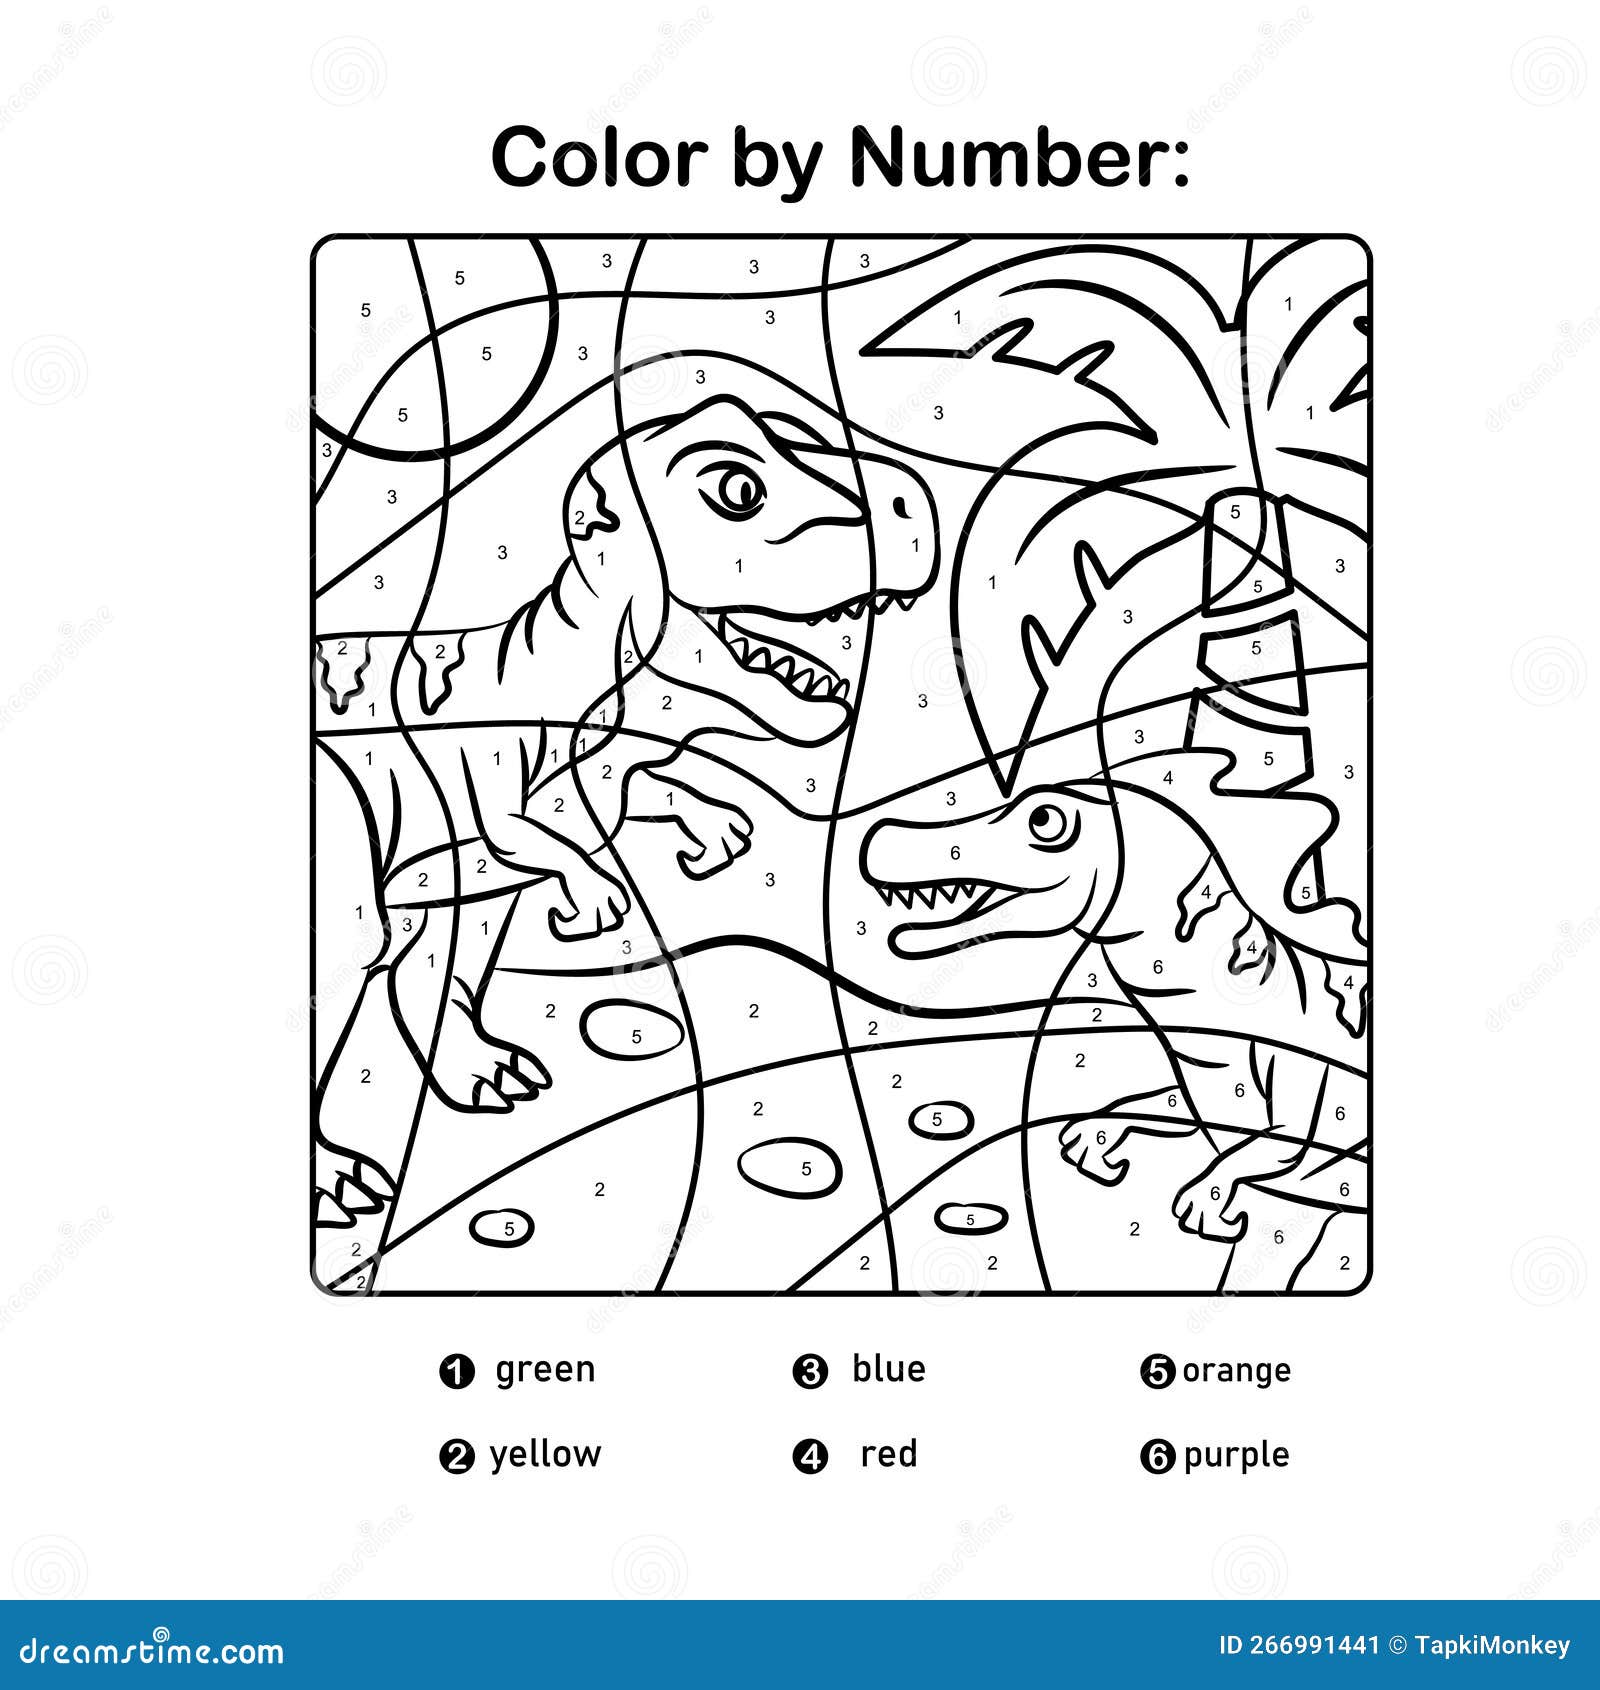 Dinosaur coloring page kids preschool activity coloring template stock vector